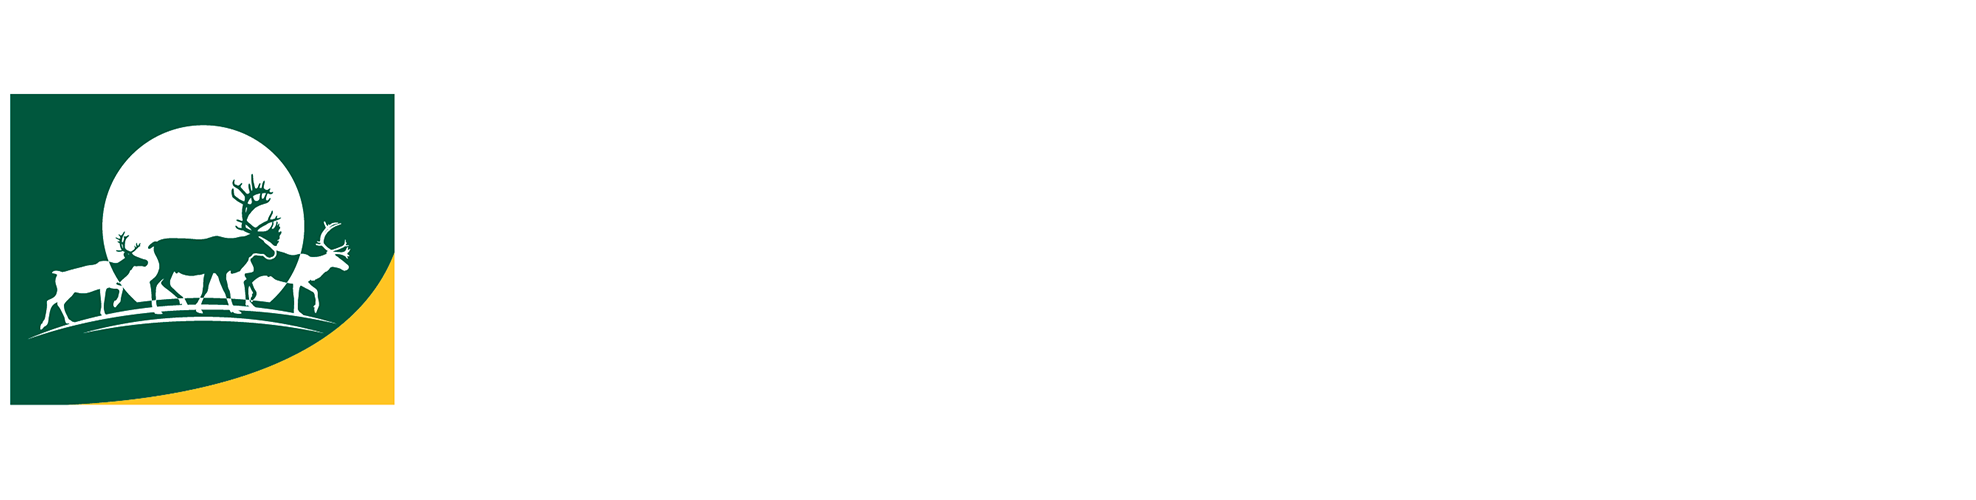 UAA - Alaska Center for Rural Health and Health Workforce - University of Alaska Anchorage